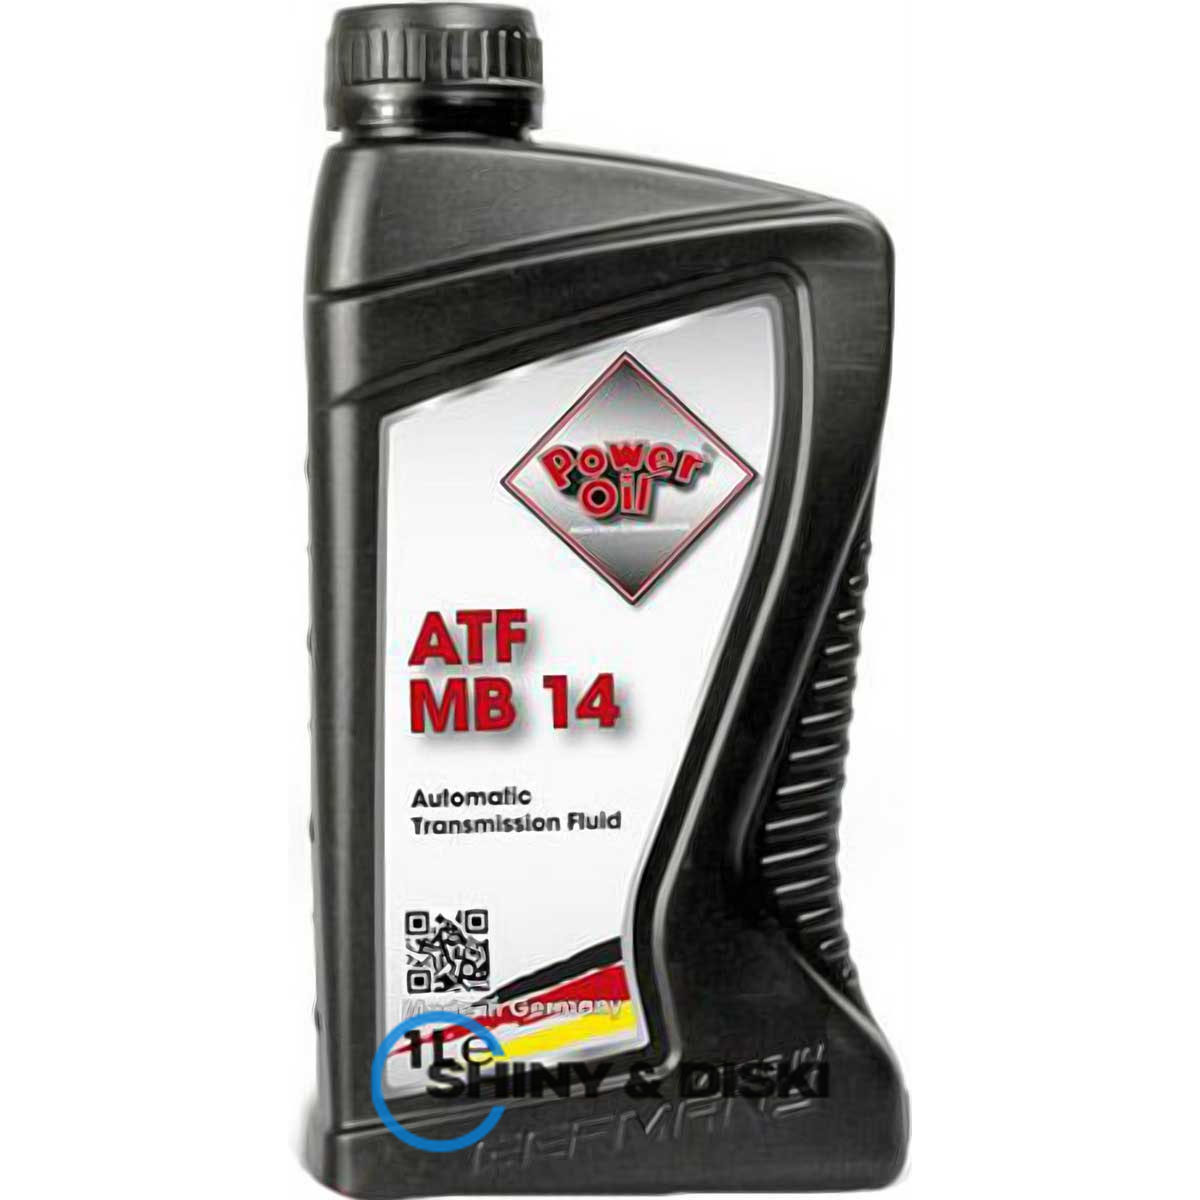 power oil atf mb 14